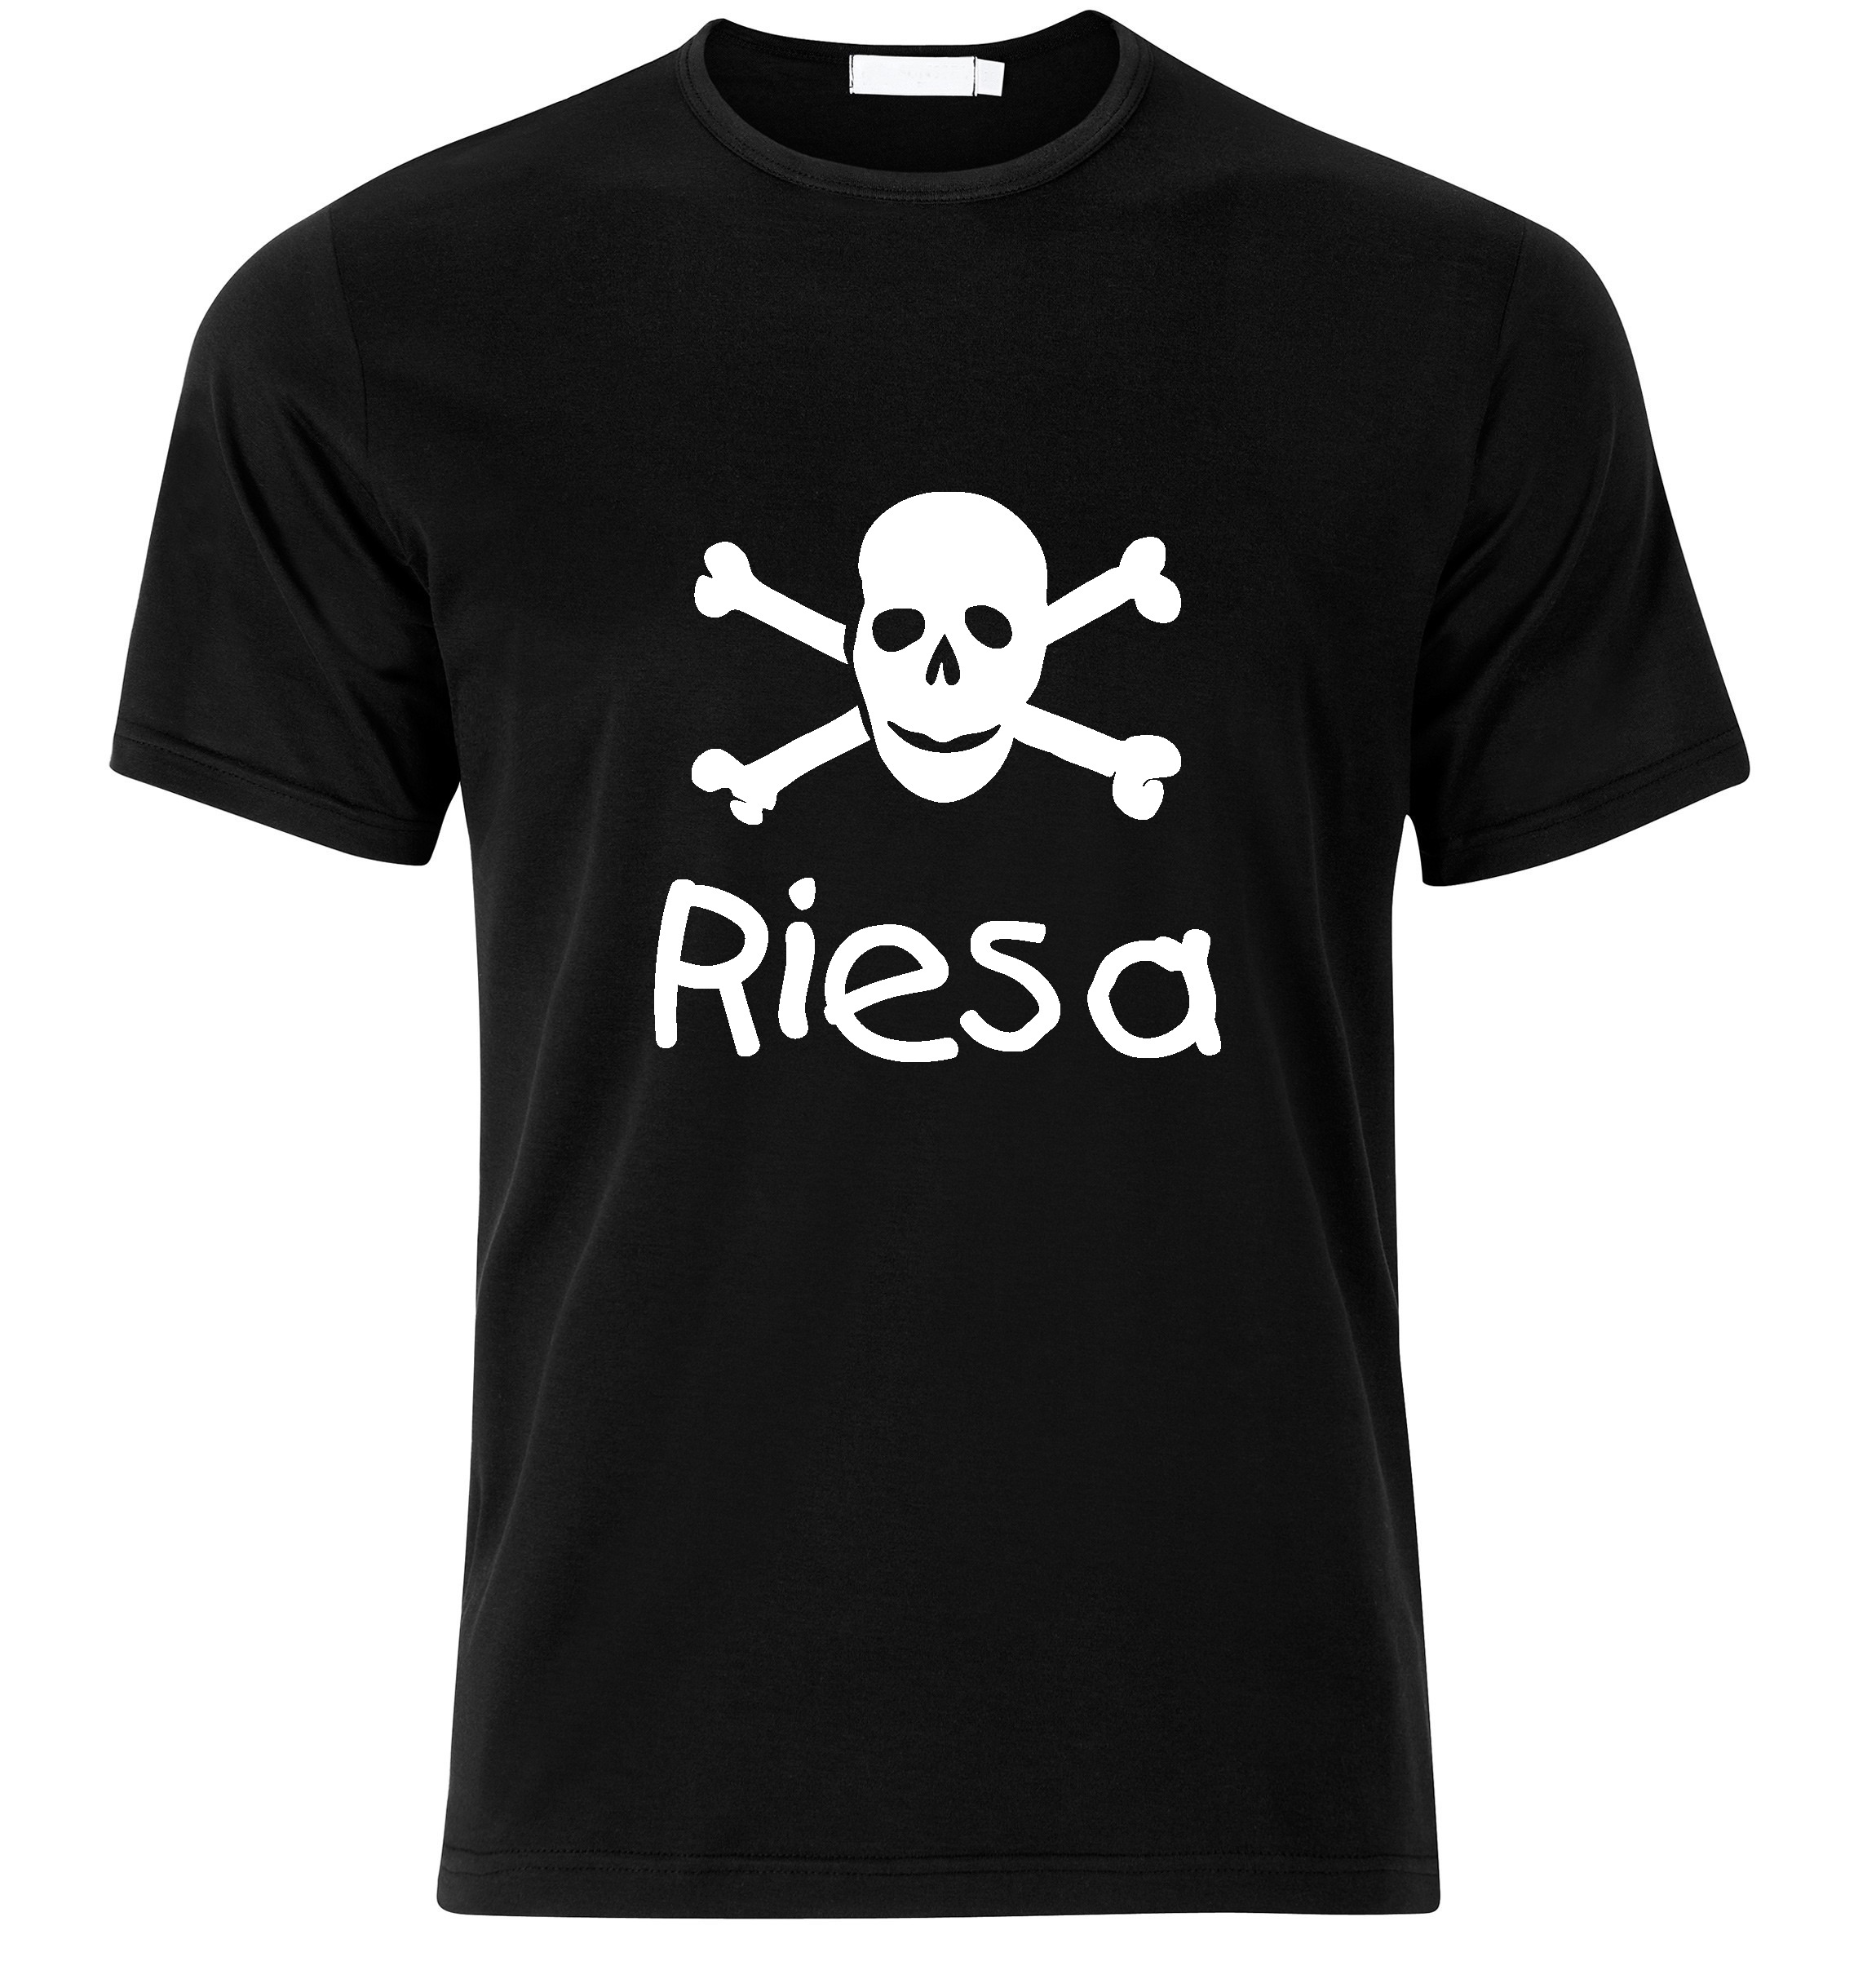 T-Shirt Riesa Jolly Roger, Totenkopf